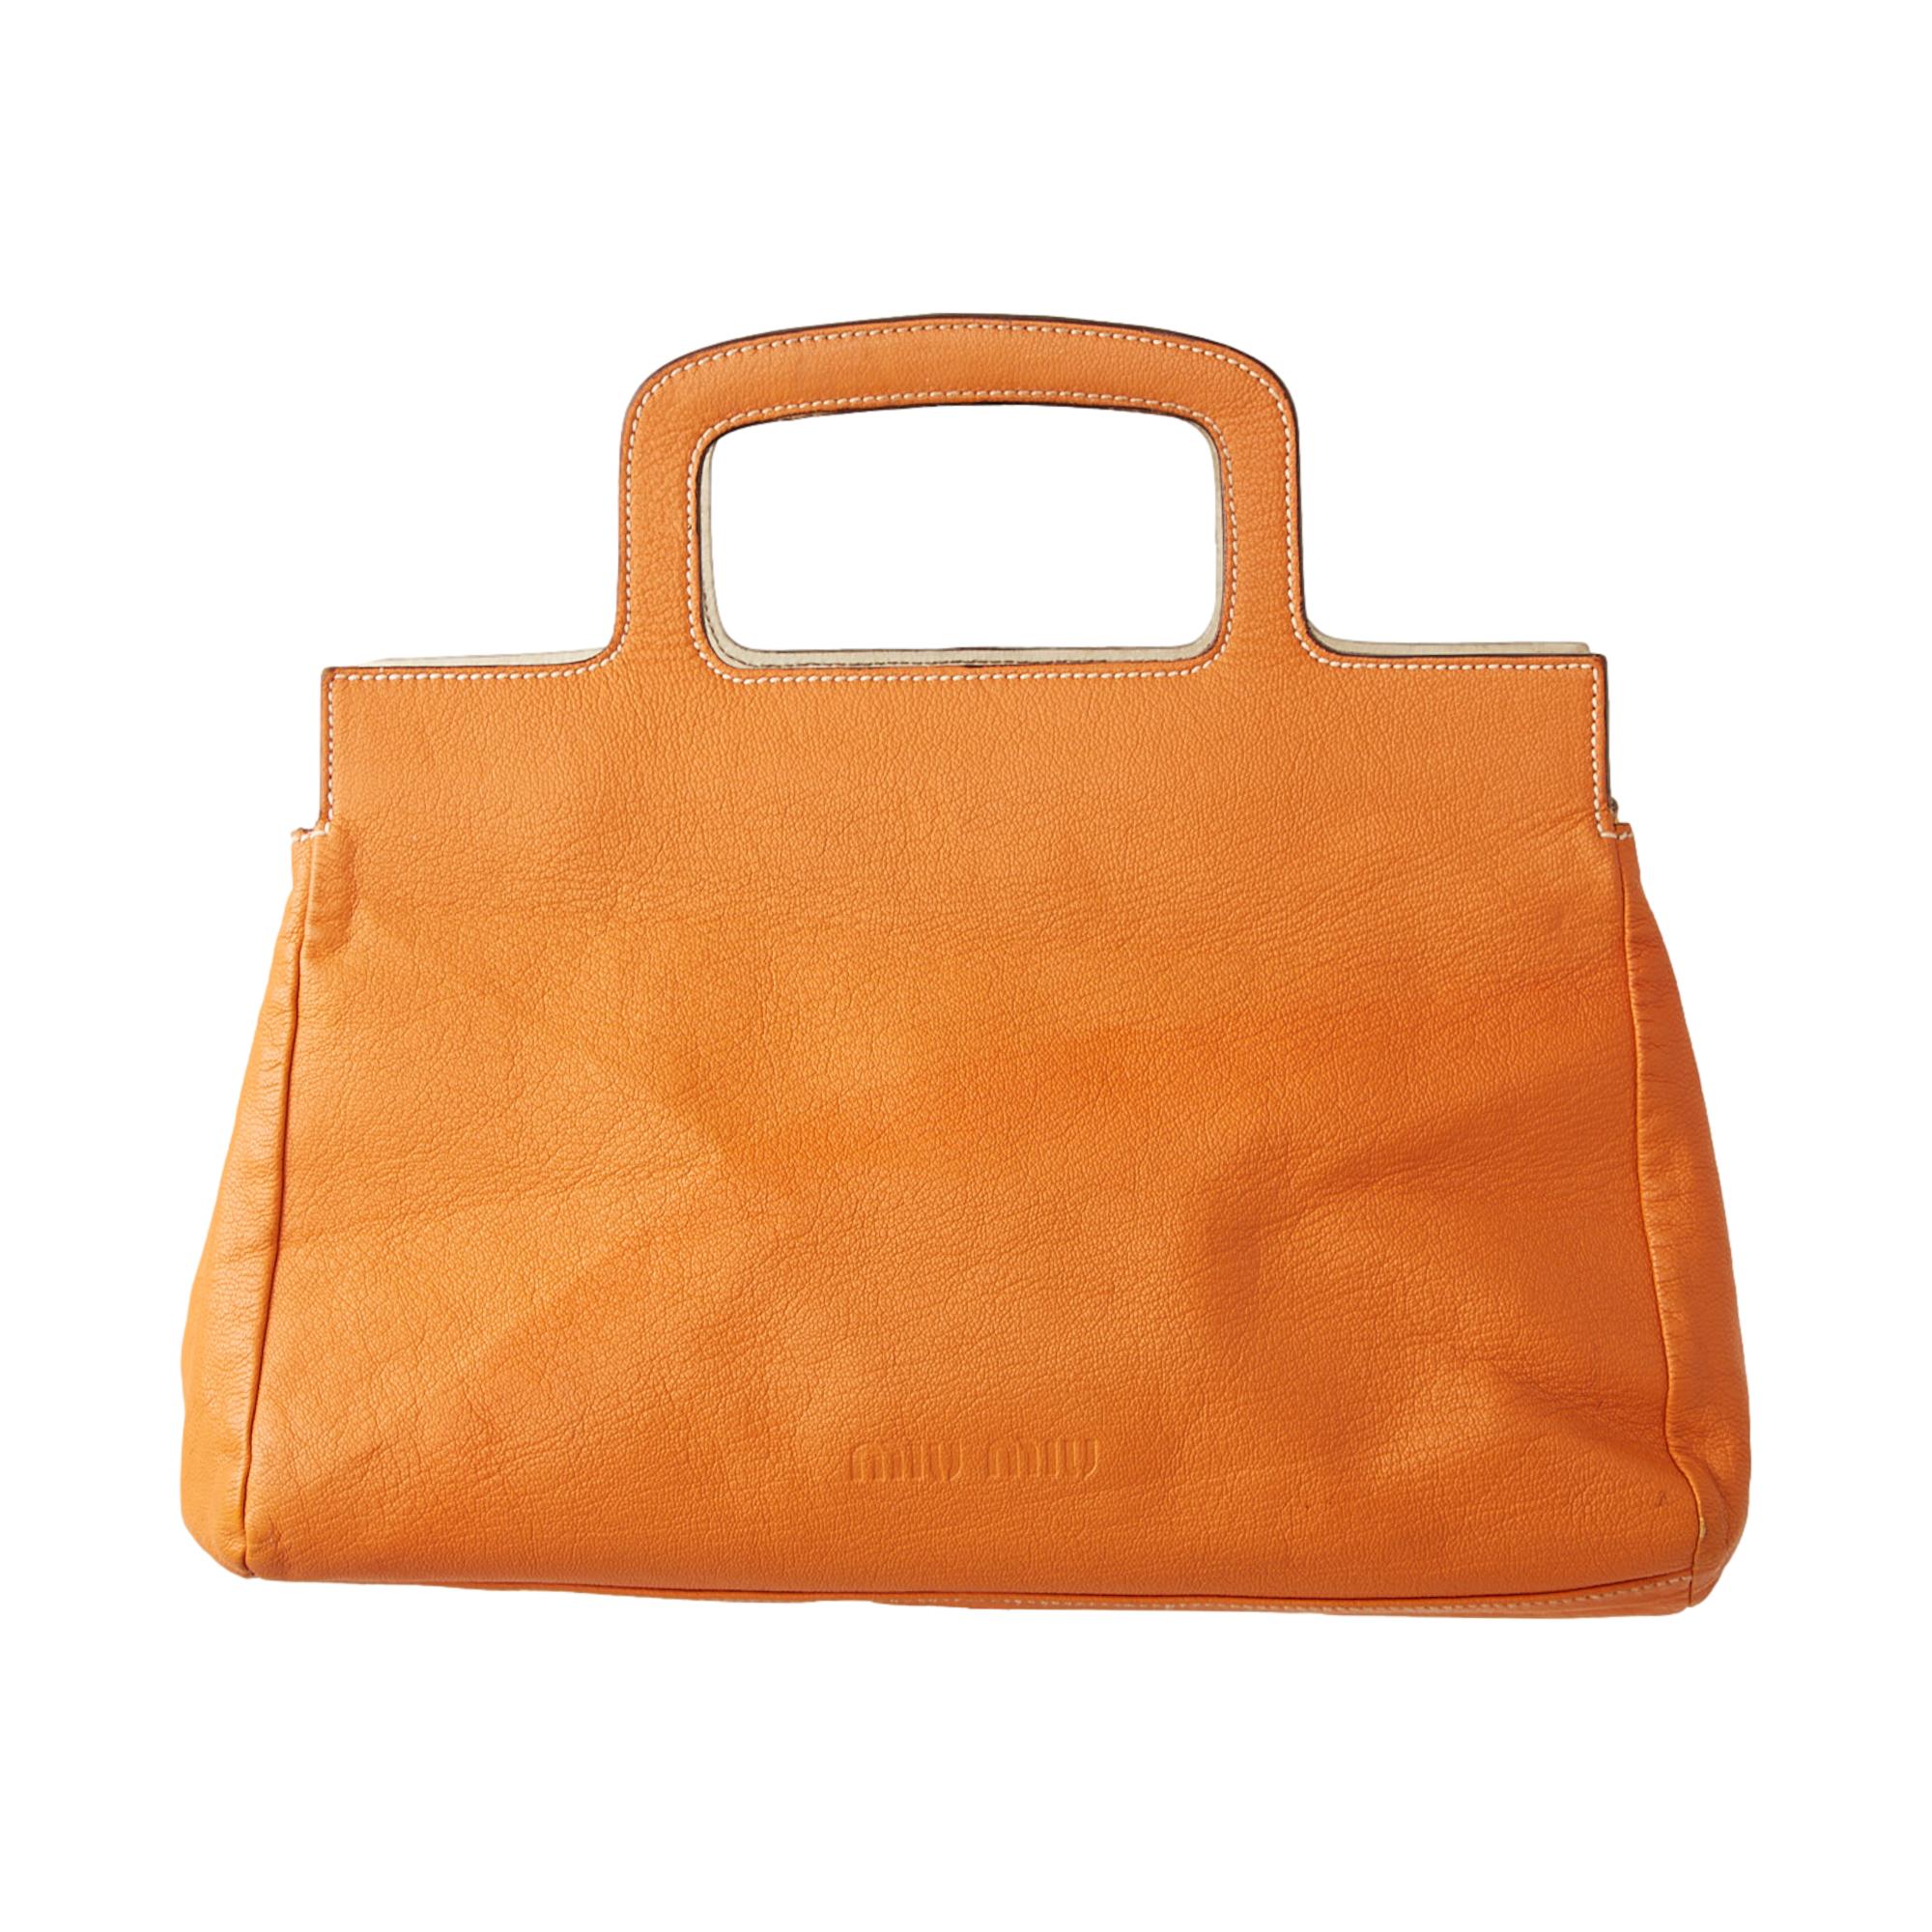 Miu Miu Orange Leather Top Handle Bag